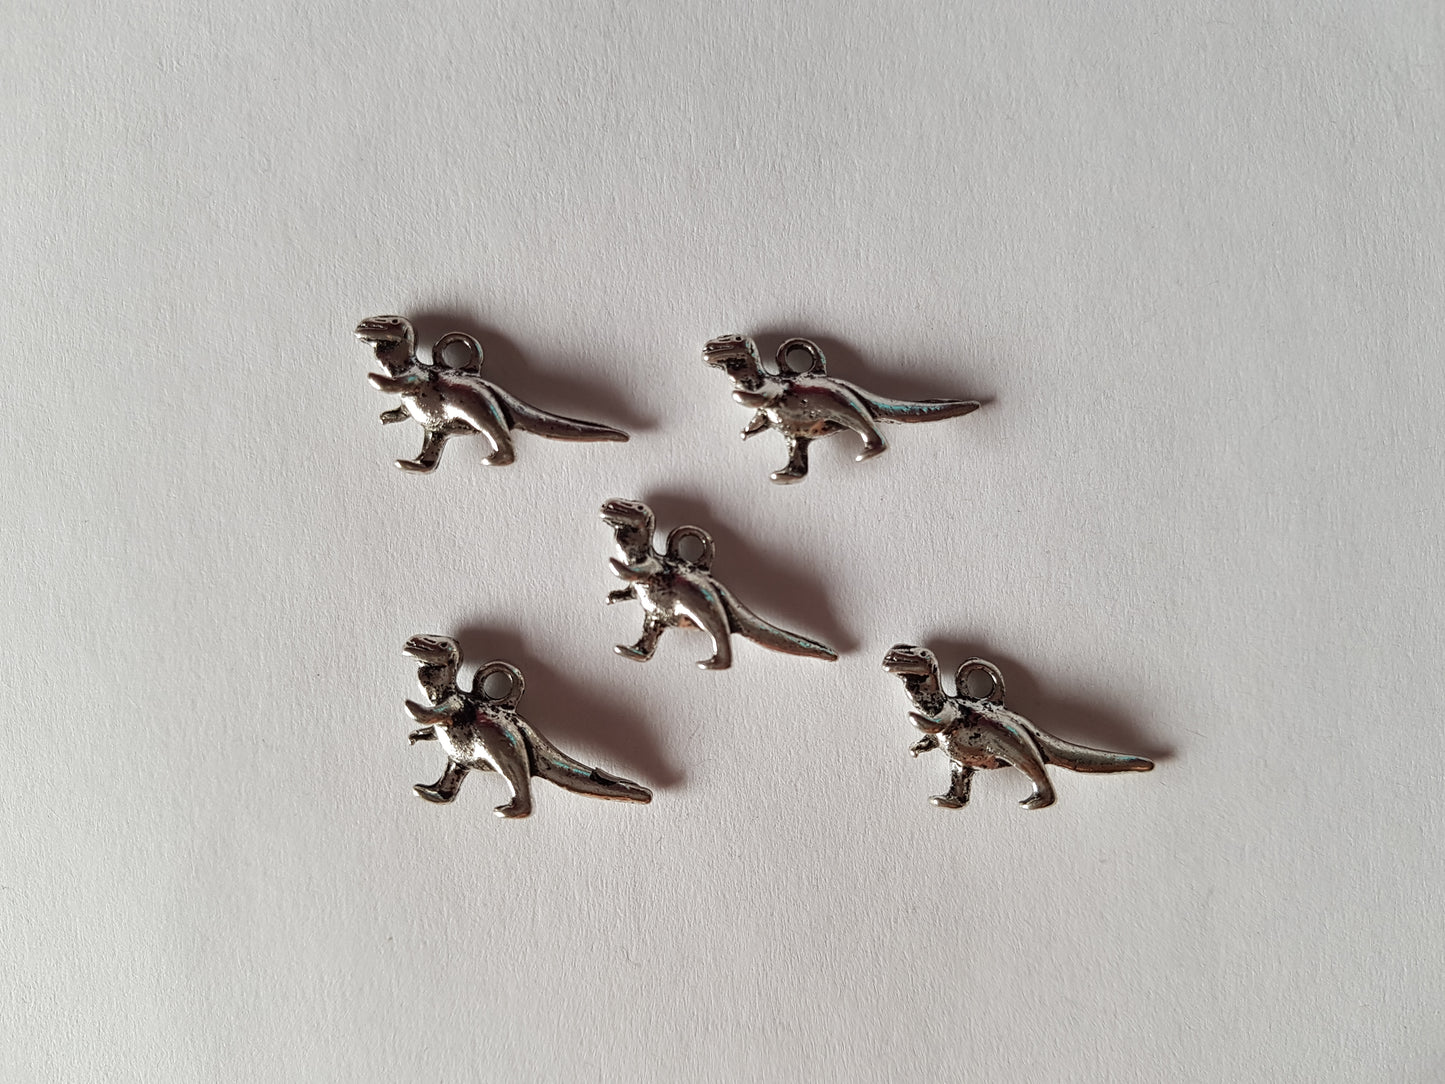 22mm silver plated dinosaur pendants